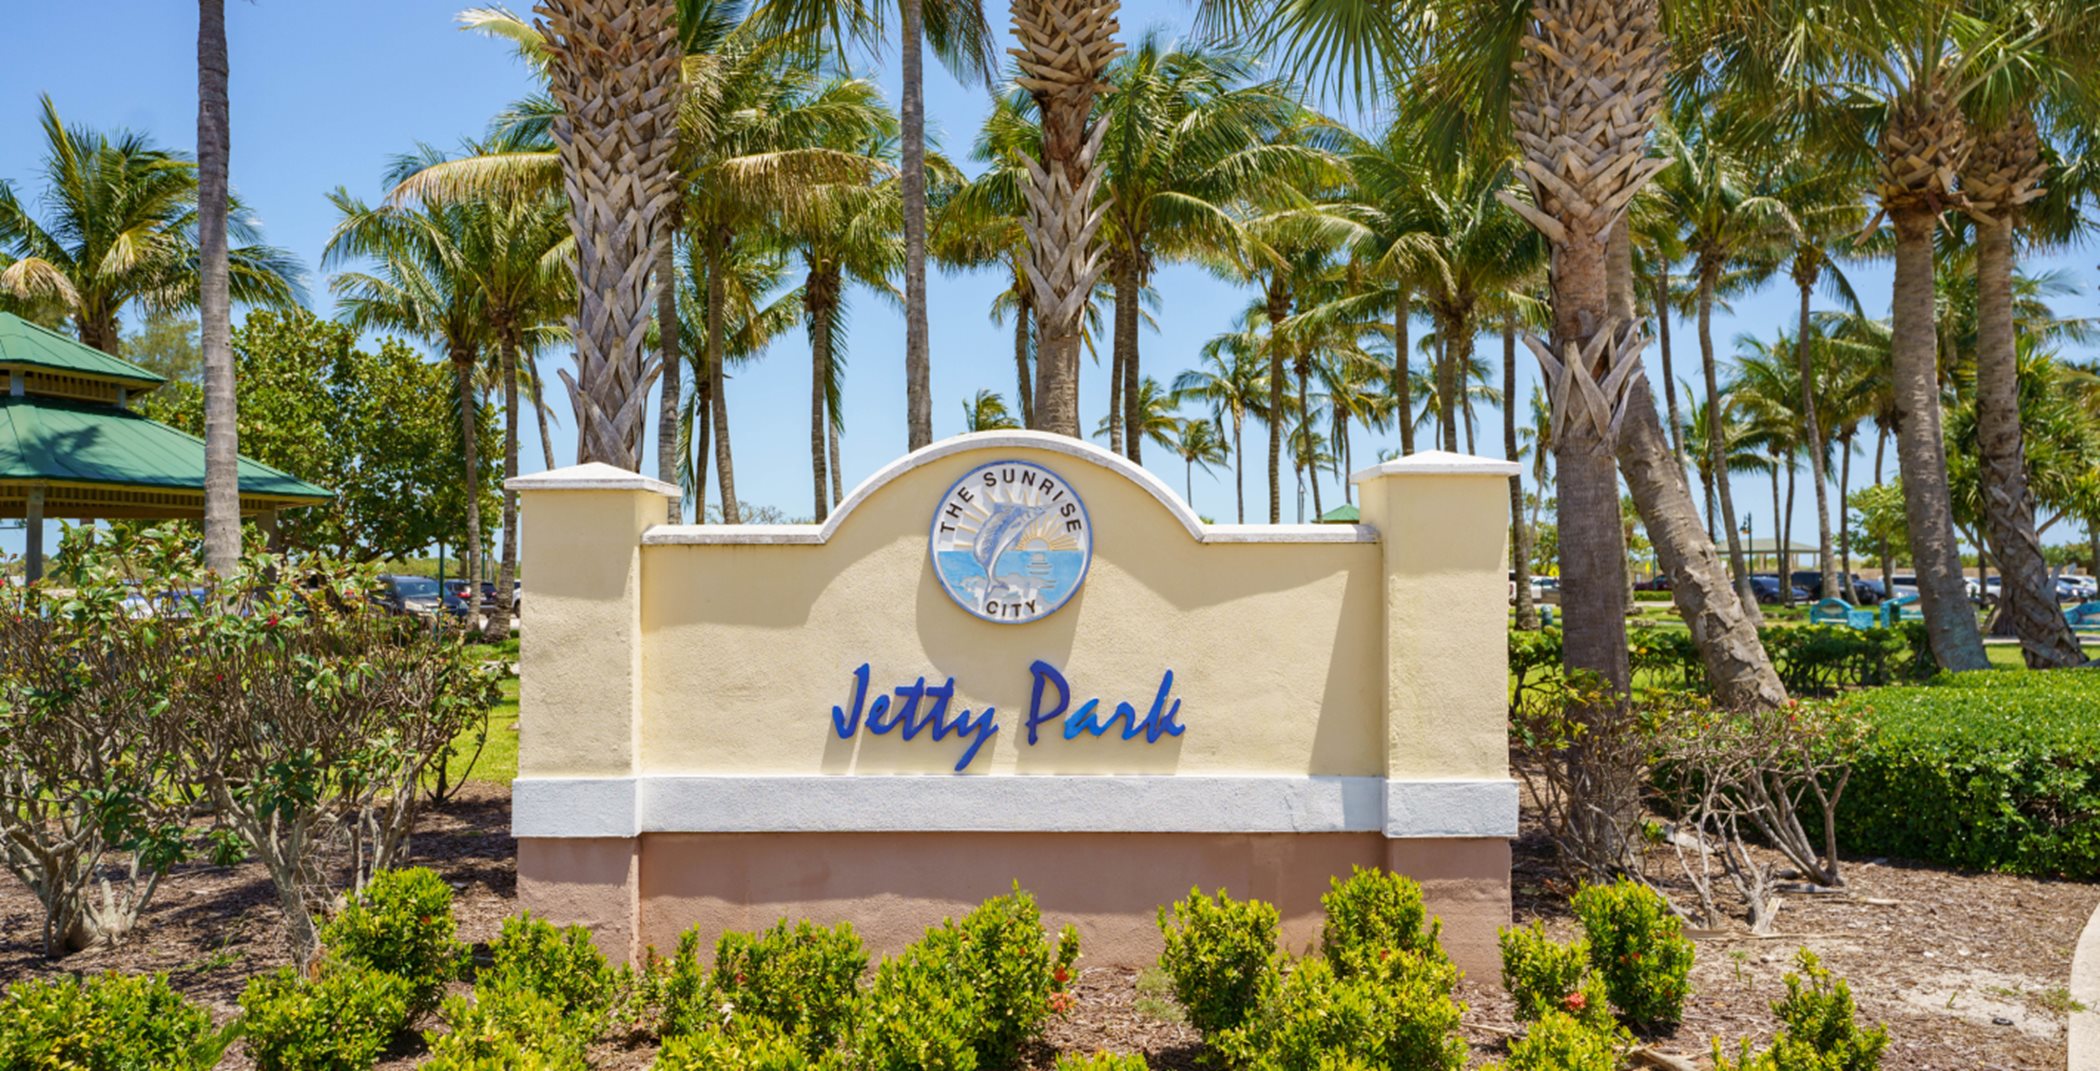 Jetty Park